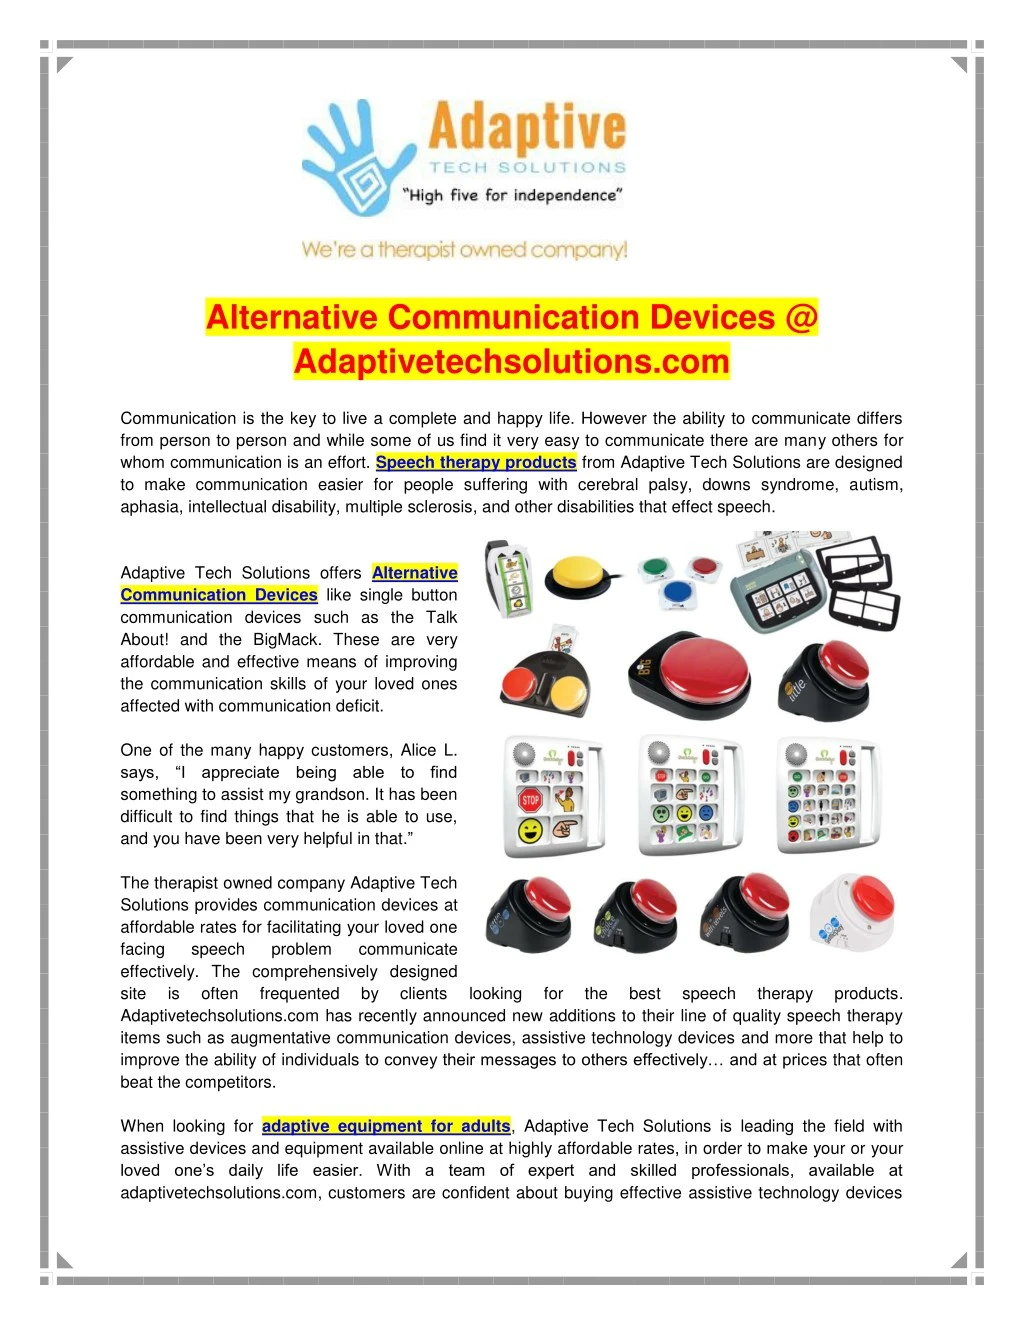 alternative communication devices